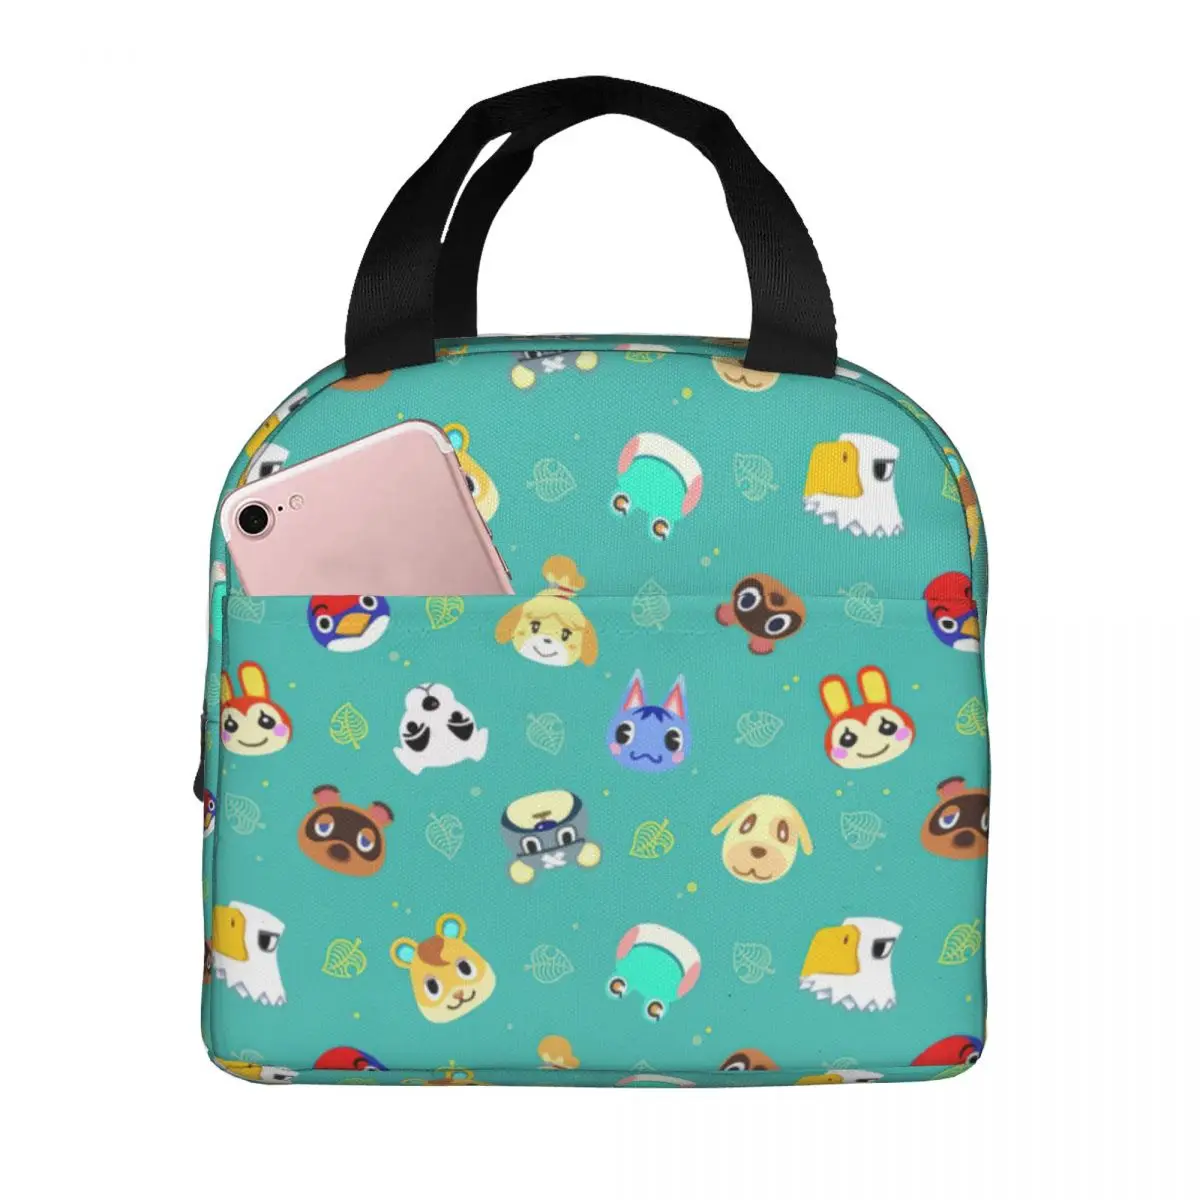 Lunch Bag for Men Women Animal Crossing Thermal Cooler Waterproof School Polyester Lunch Box Handbags